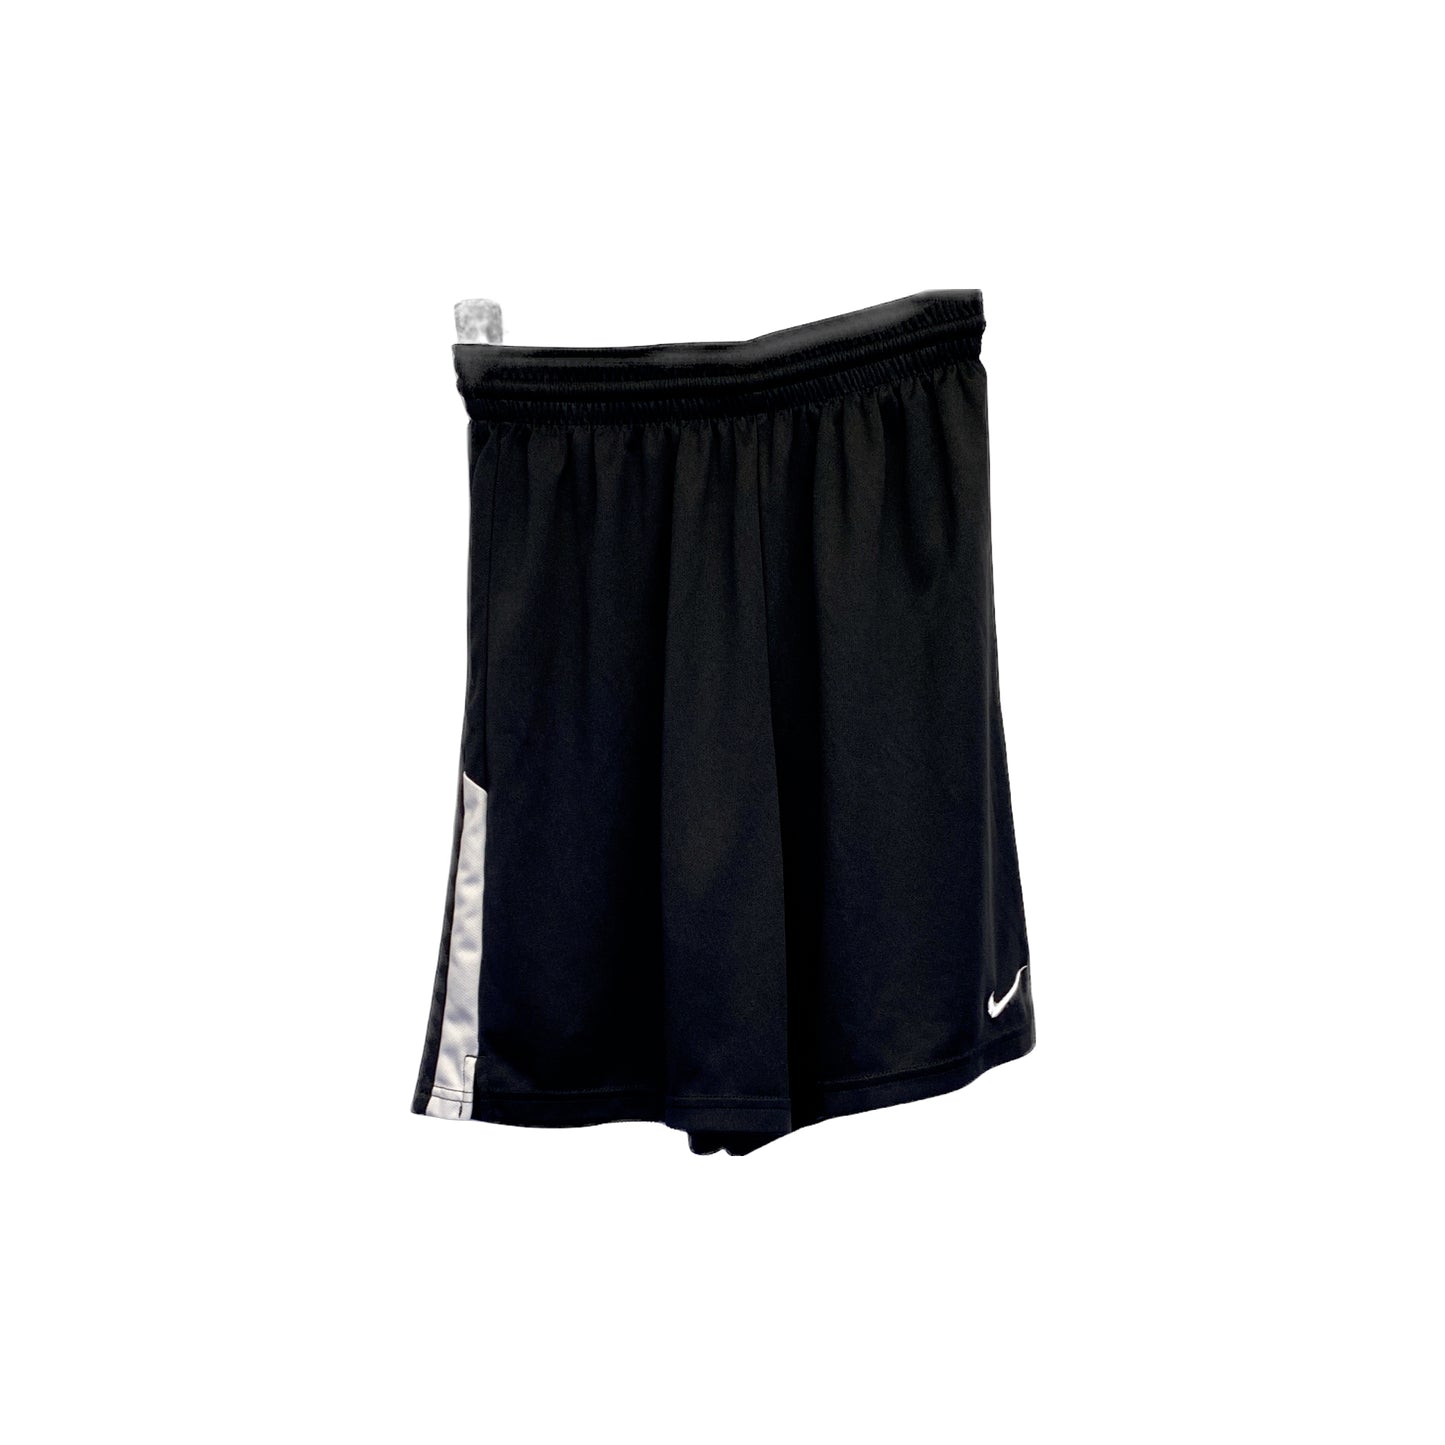 Nike Basketball Shorts - L